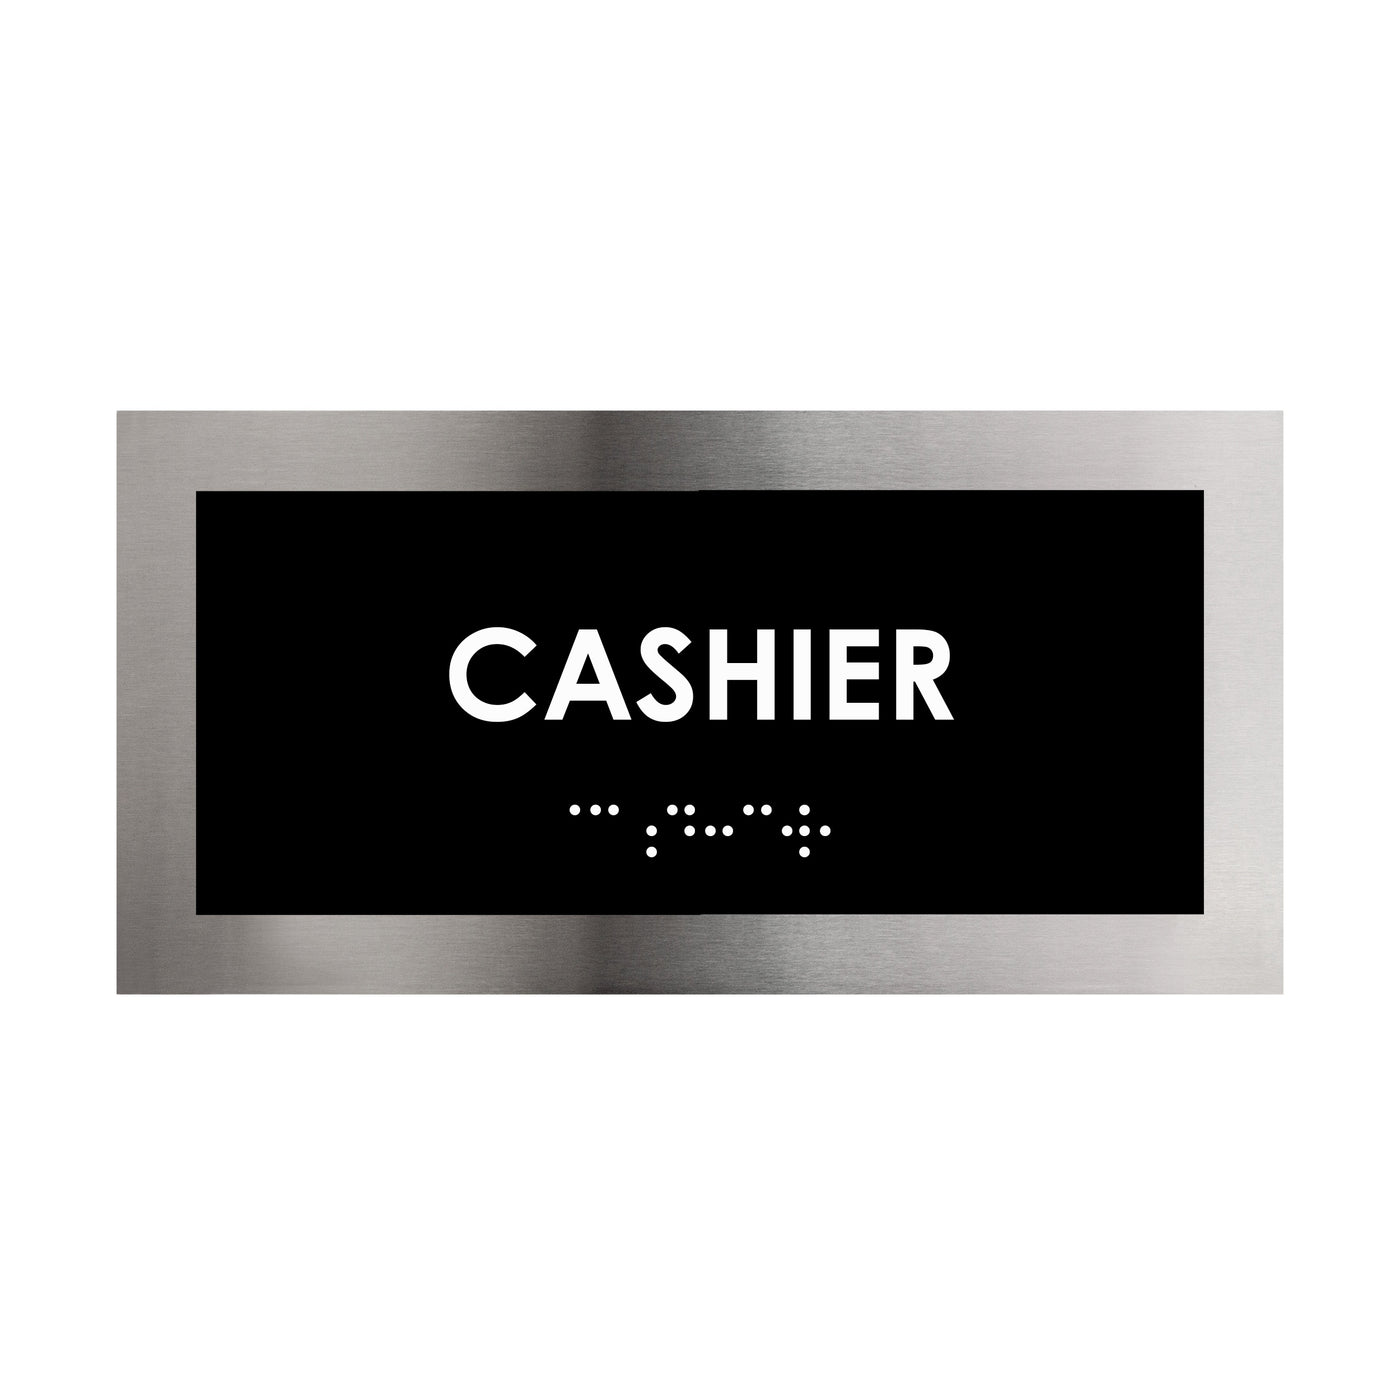 Door Signs - Cashier Sign - Stainless Steel Plate - "Modern" Design